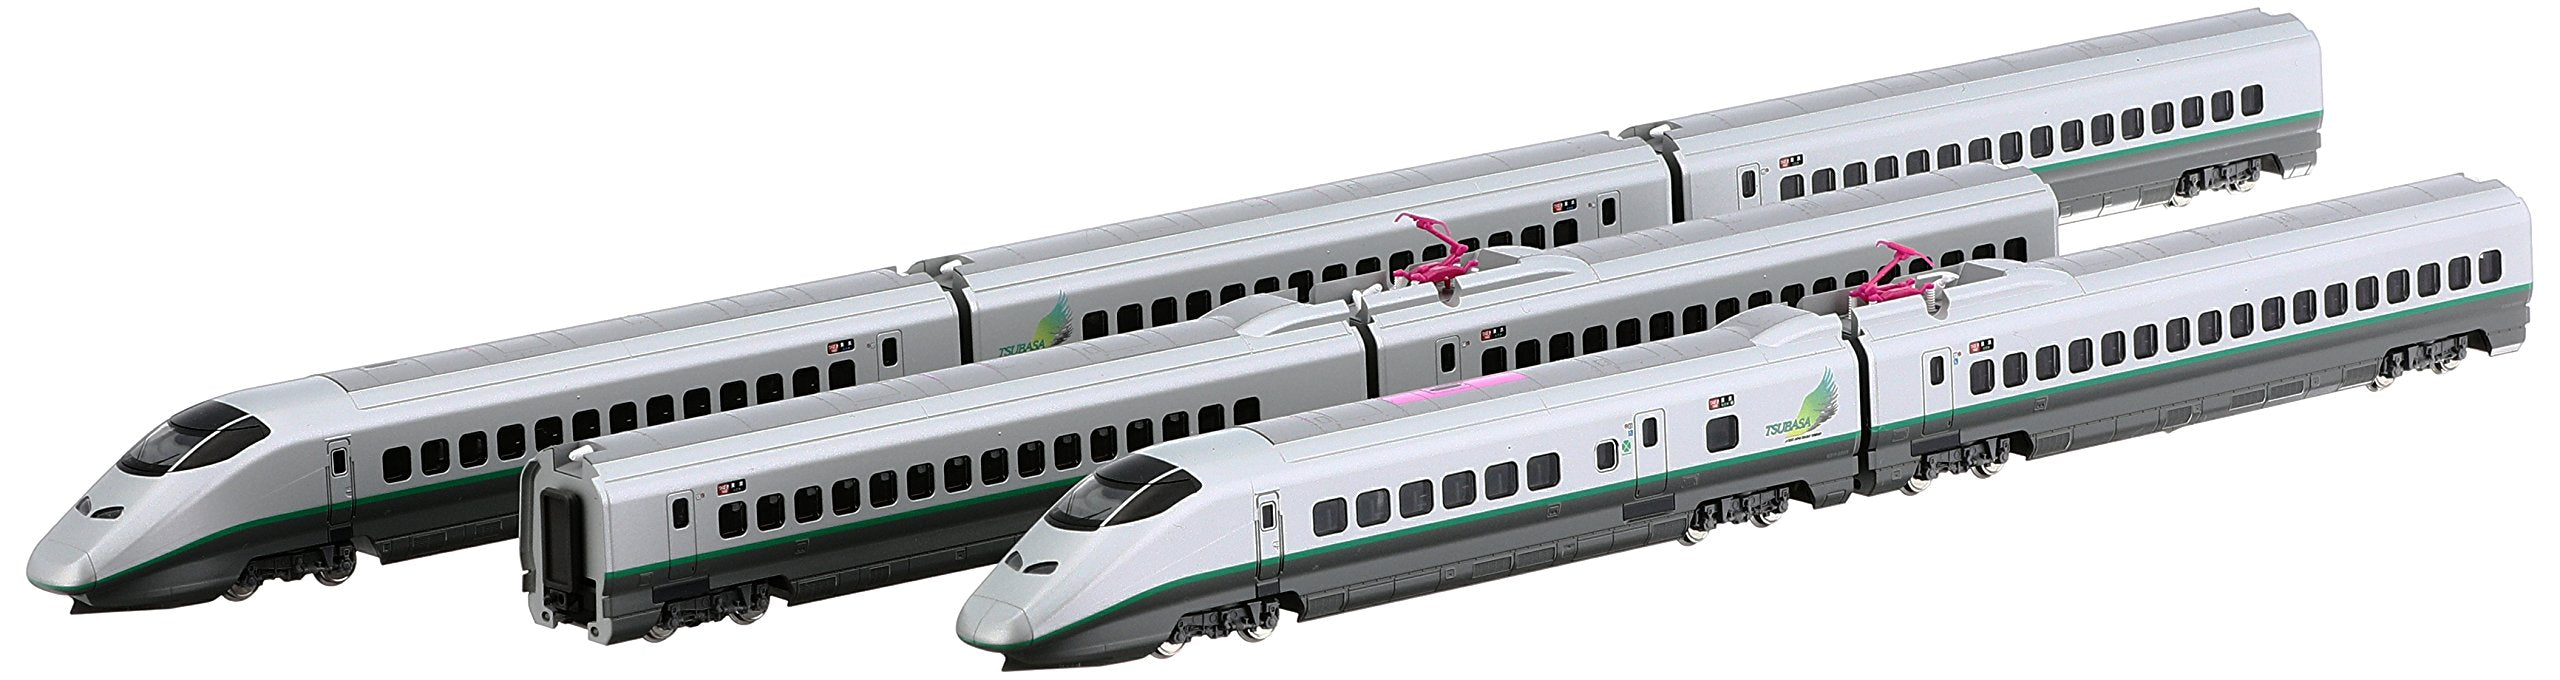 KATO 10-1289 Série E3-2000 Yamagata Shinkansen 'Tsubasa' 7 Voitures Set N Scale